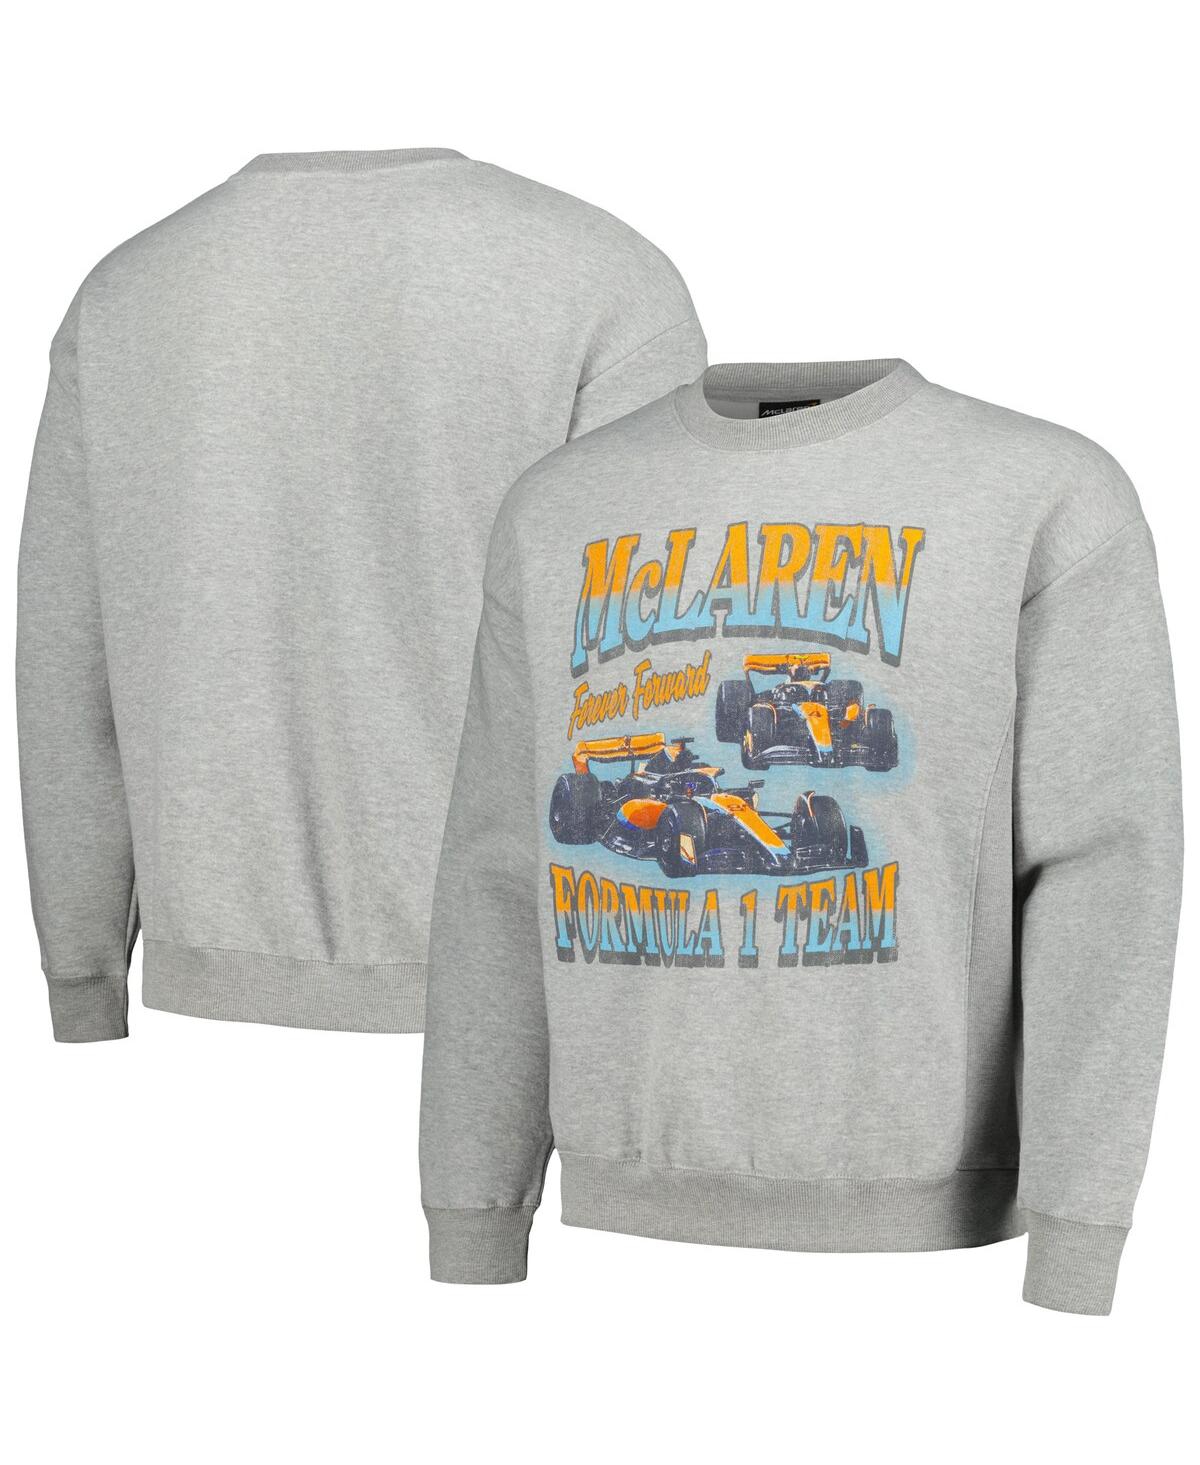 Outerstuff Men's Gray Mclaren F1 Team Parade Lap Pullover Sweatshirt